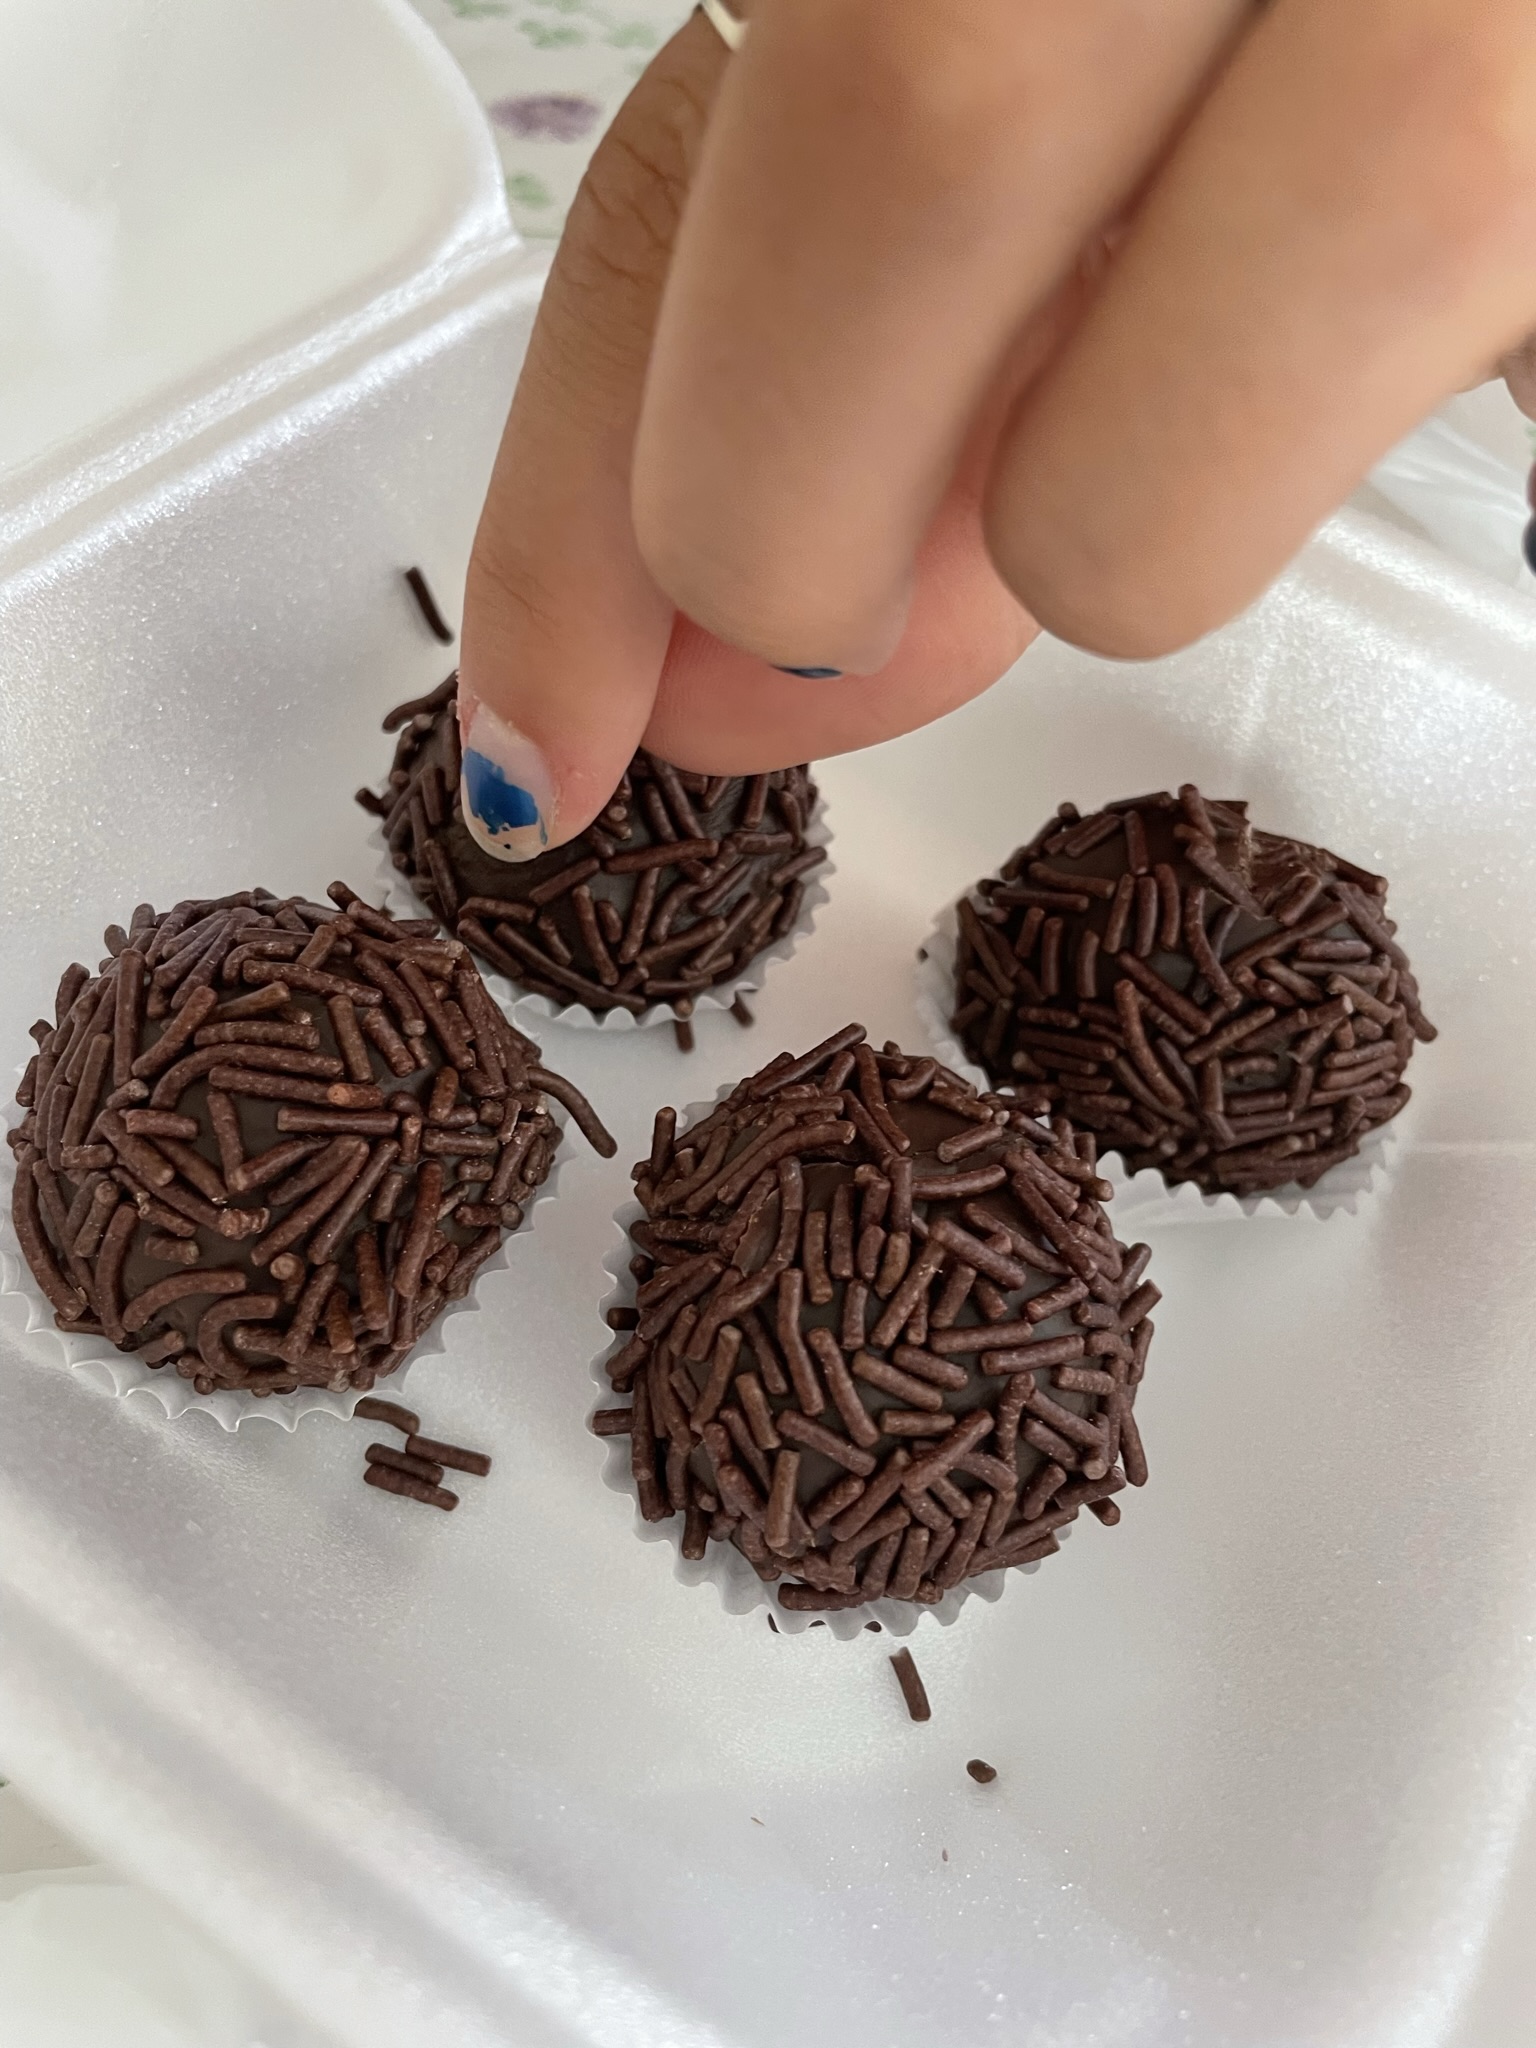 Brigadeiros- Brazilian chocolate truffles